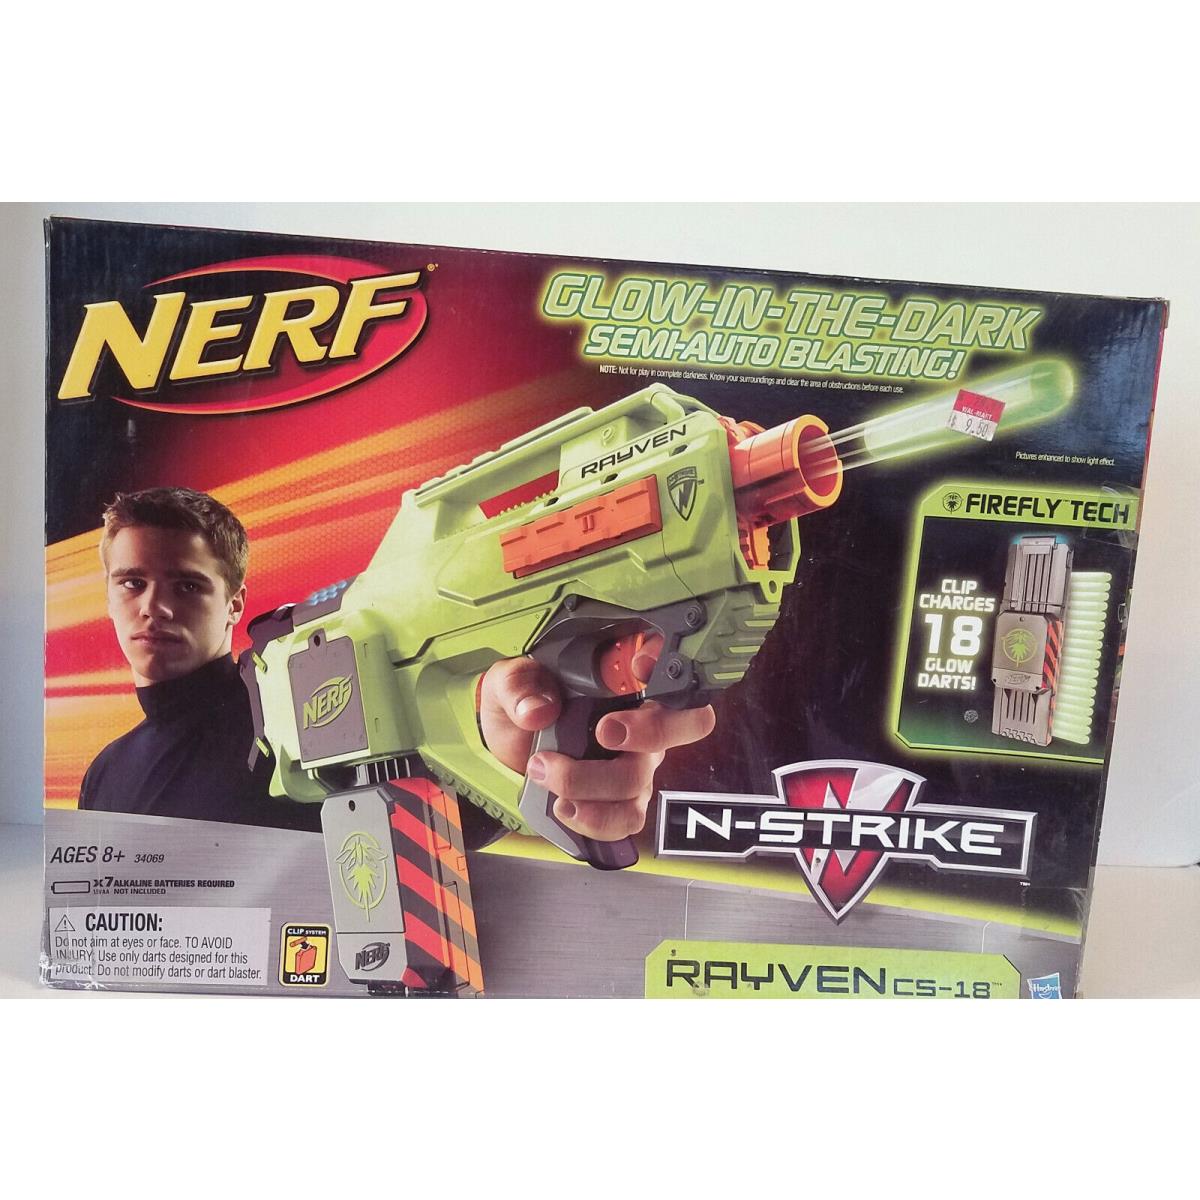 Nerf N-strike Rayven CS-18 2011 Hasbro